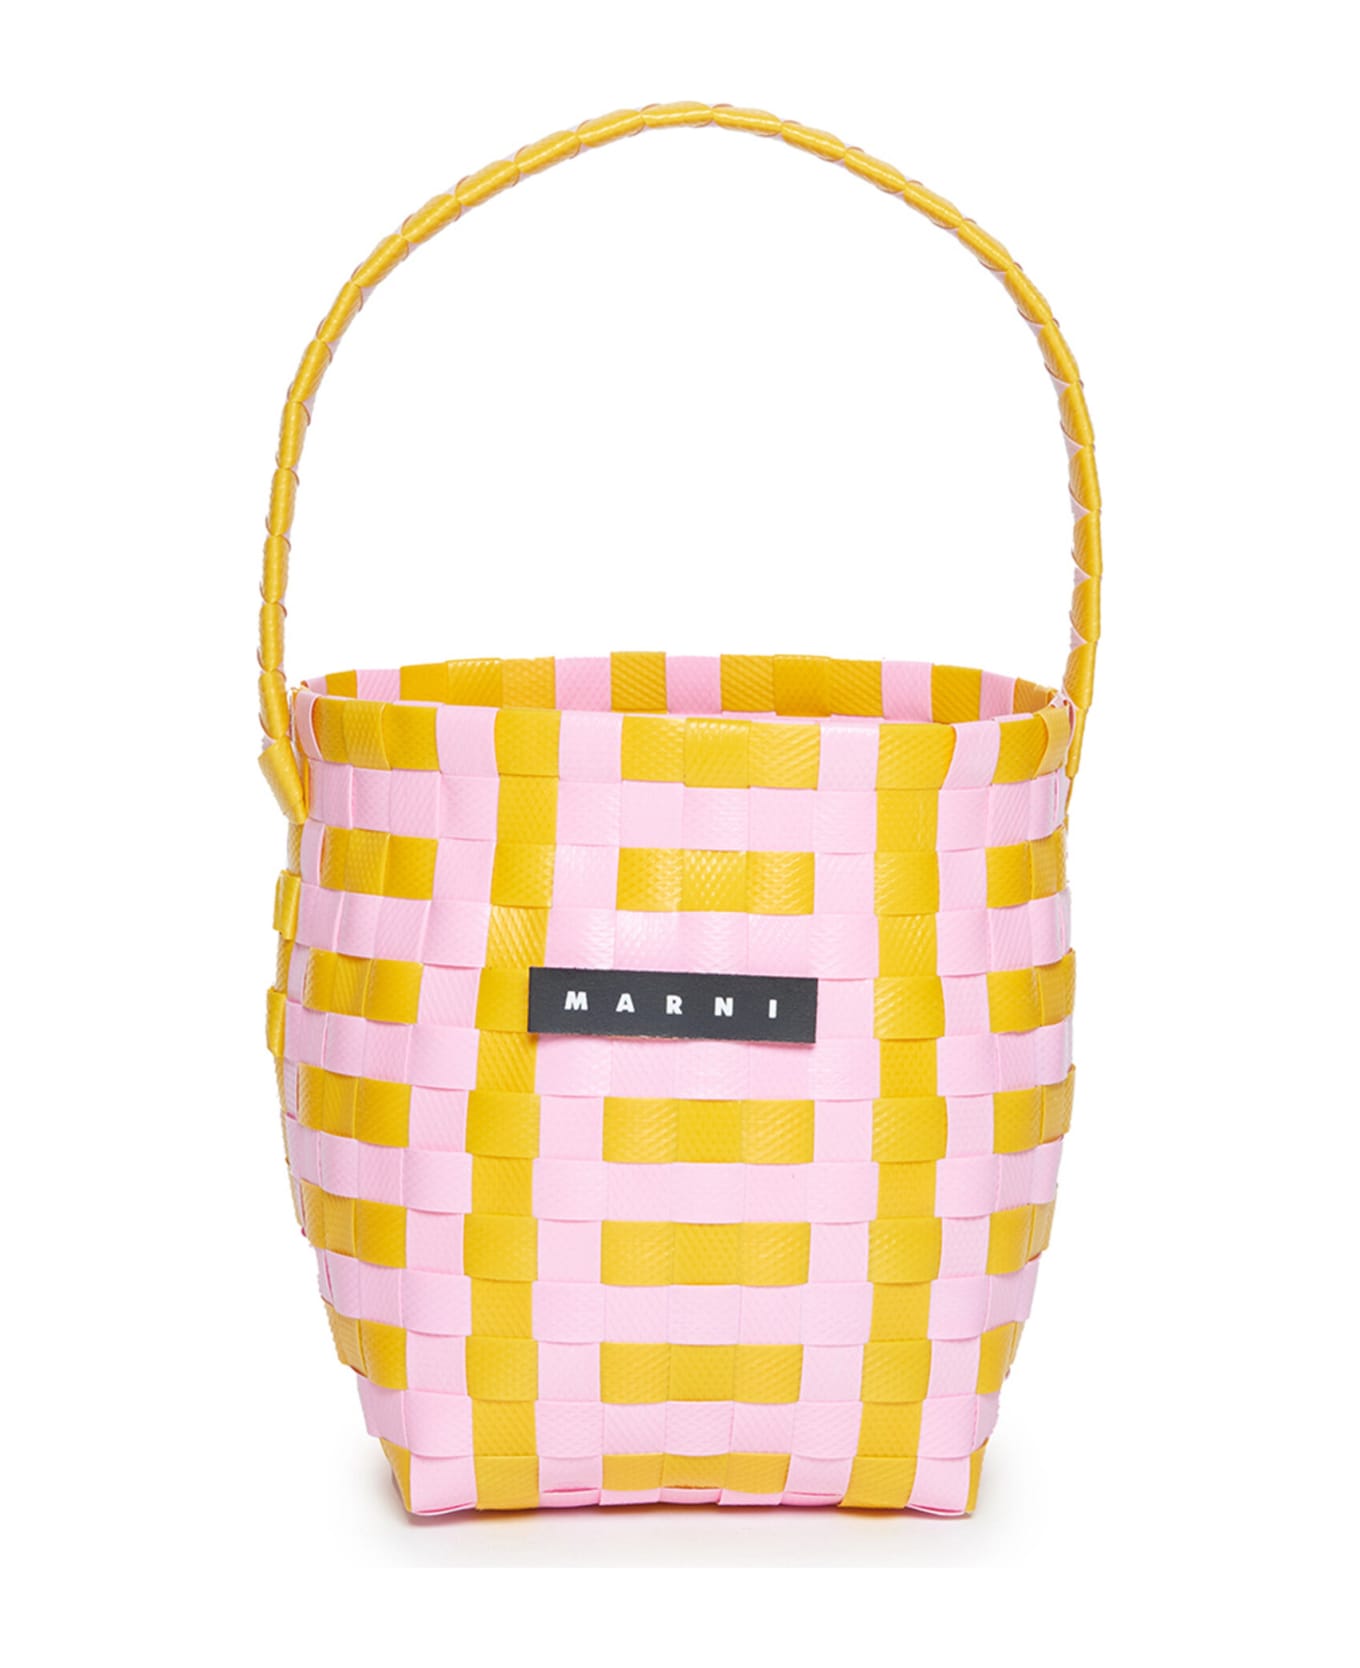 Marni Mw62f-pod Kid Bag Superbreak Bags Marni Lemon Yellow Woven Pod Bag With Single Handle And Applied Logo - Lemon zest yellow